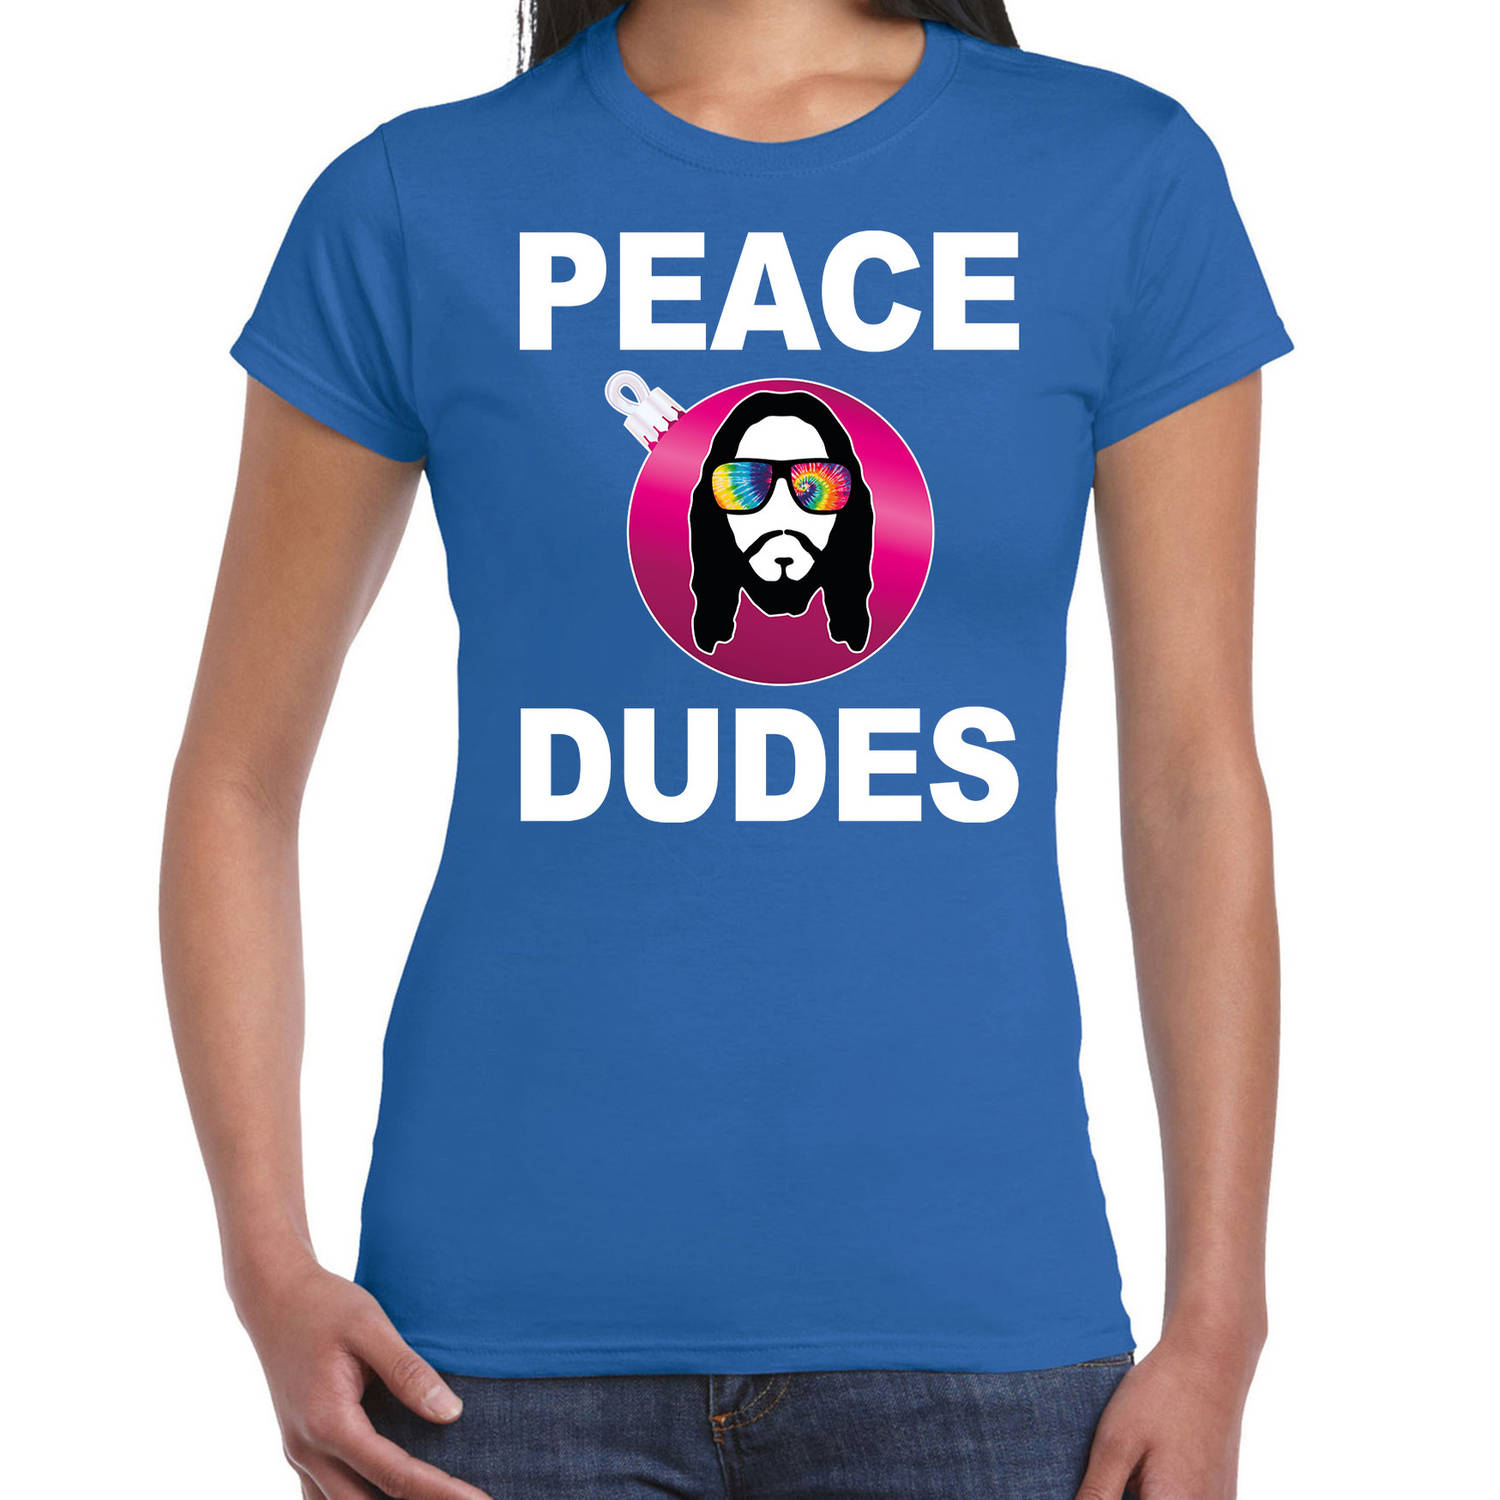 Blauw Kerstshirt / Kerstkleding peace dudes voor dames met social media kerstbal S - kerst truien